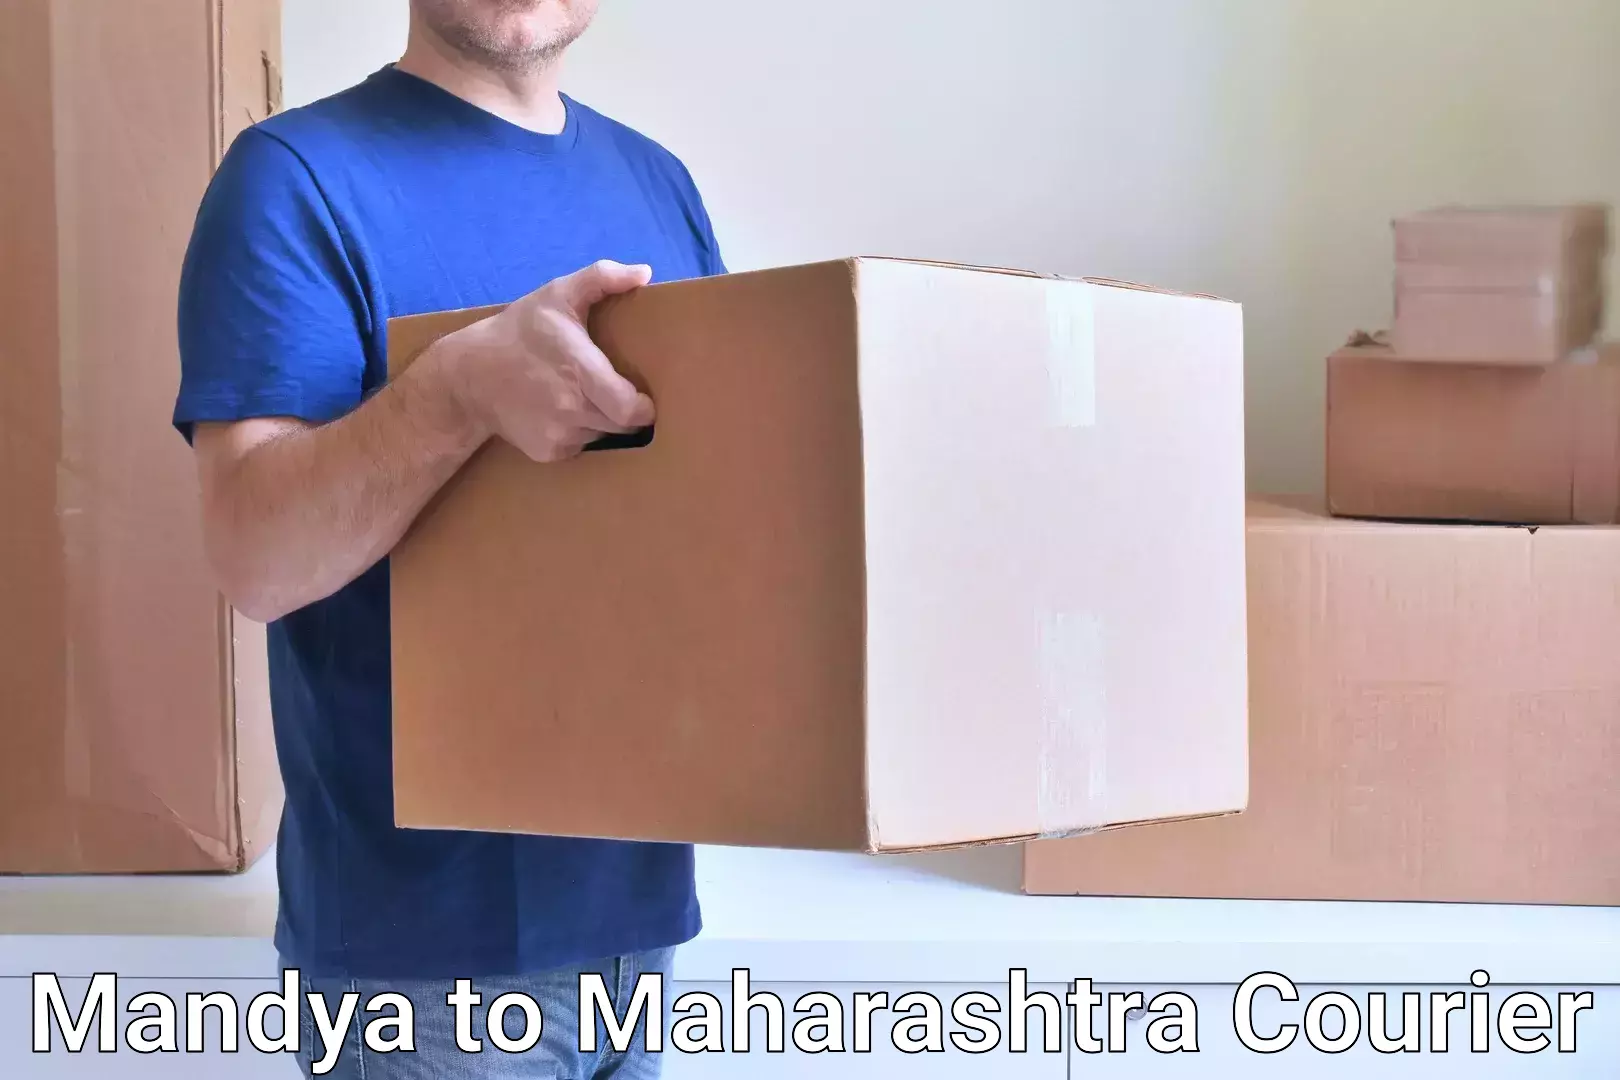 Next-day delivery options Mandya to Lasalgaon